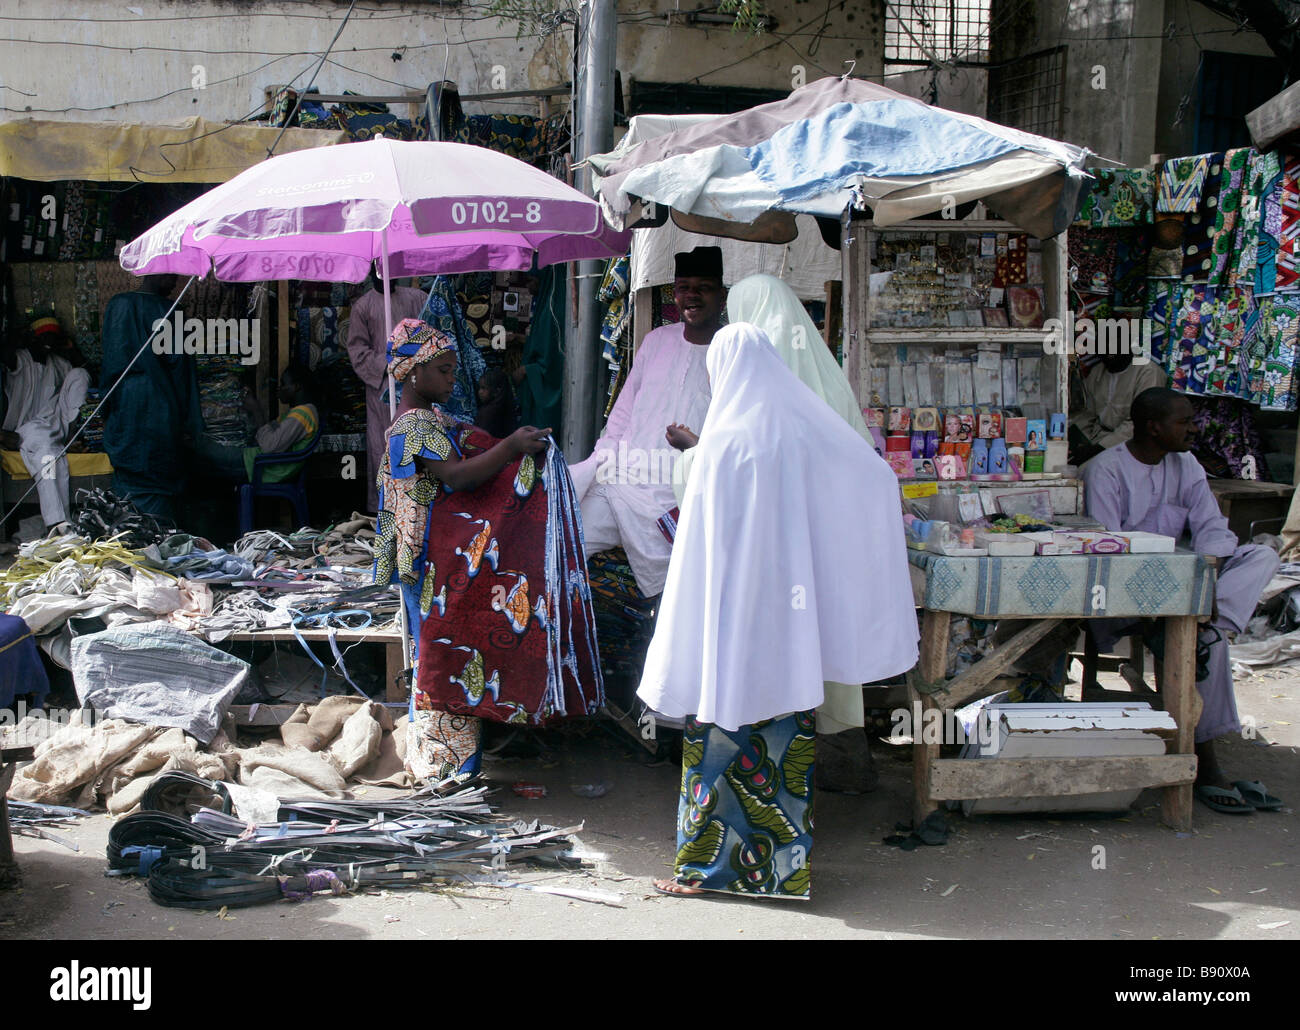 Vendors in the open air market in Maiduguri, Nigeria Stock Photo